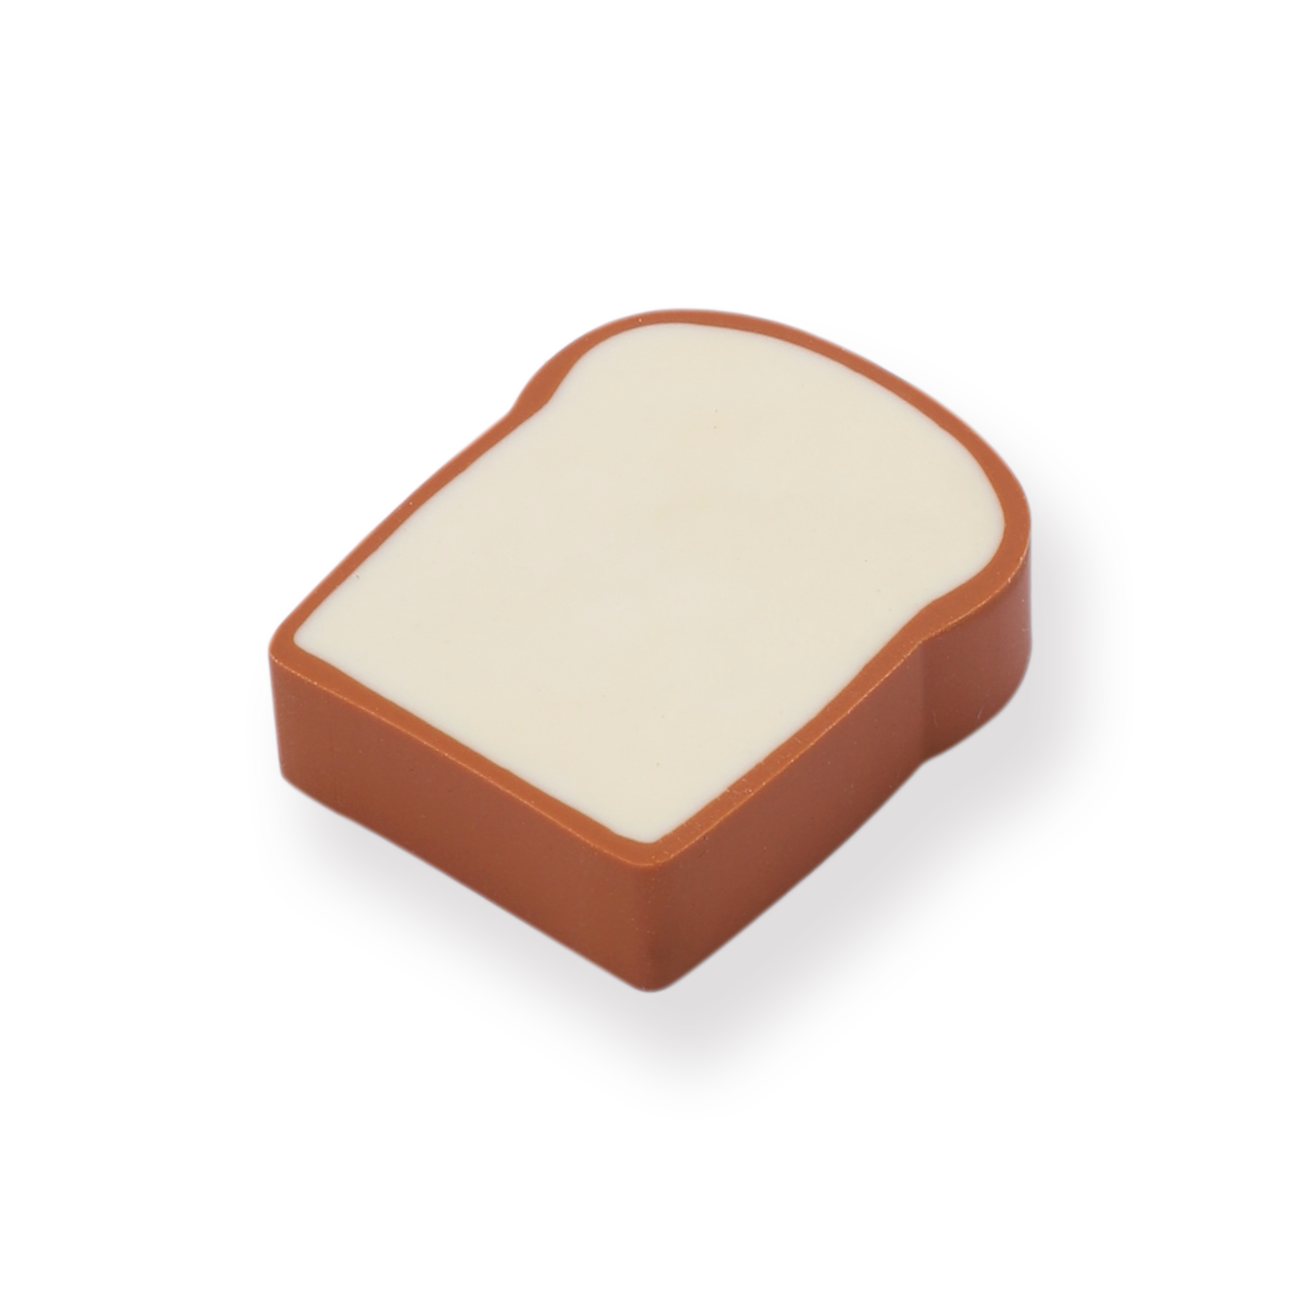 Toast Bread Eraser - Stationery Pal